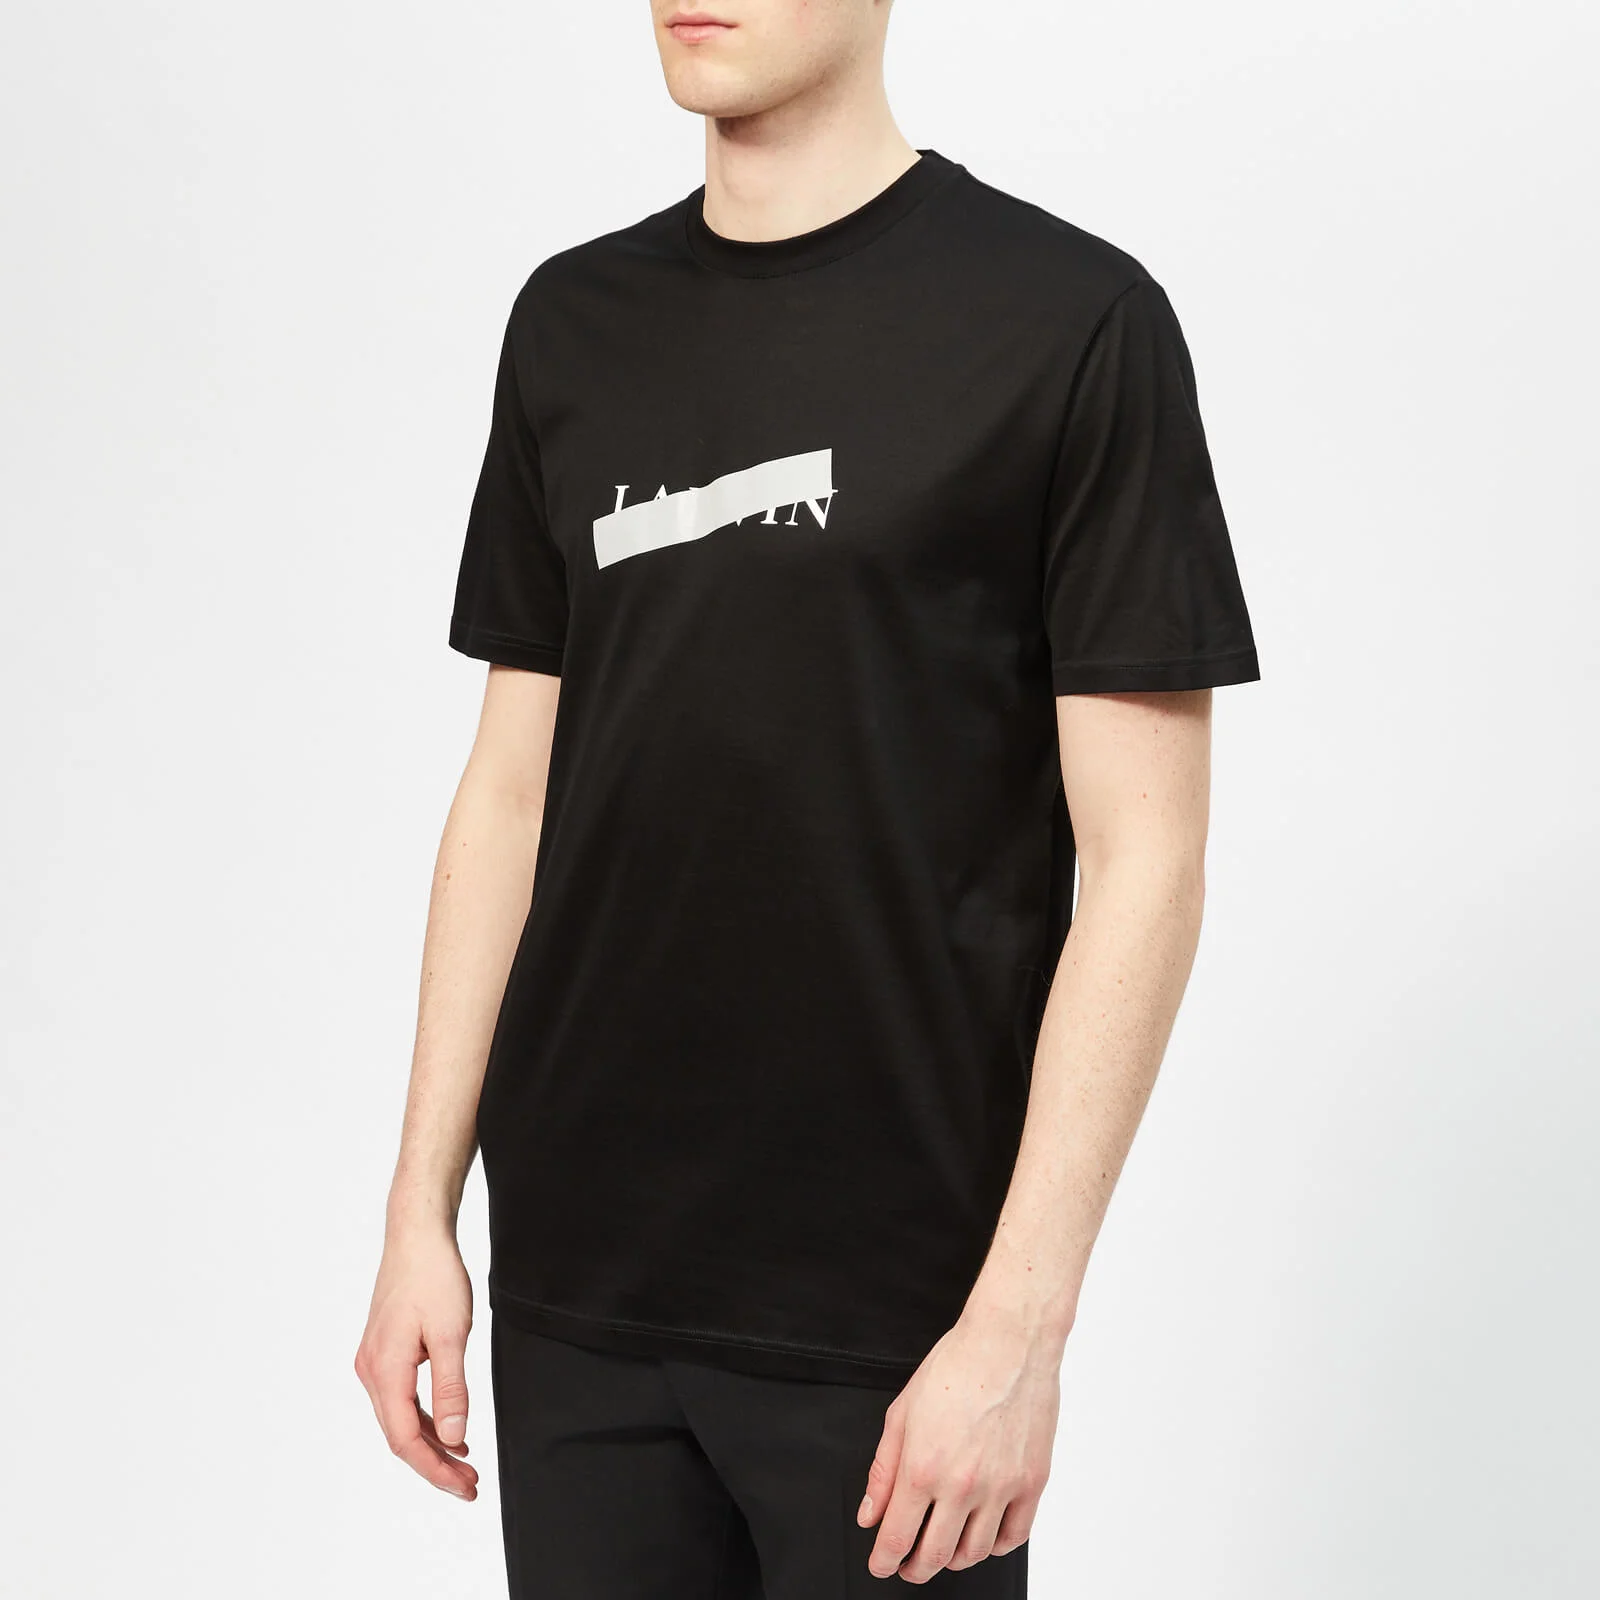 Lanvin Men's Lanvin Barre Print T-Shirt - Black Image 1